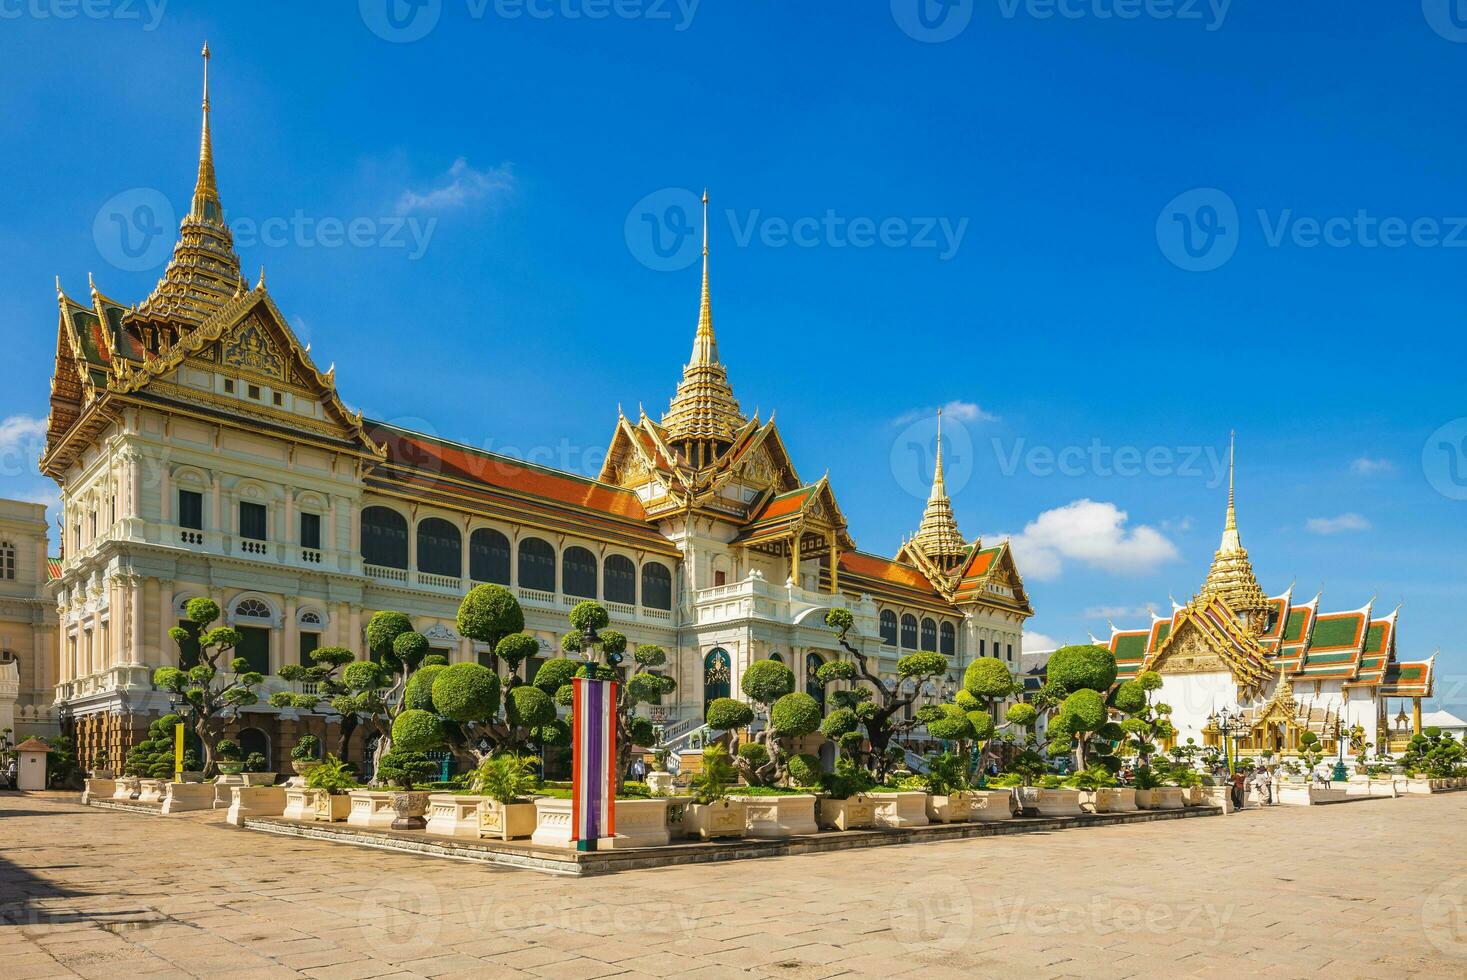 chakri maha Prasat, groots paleis, gelegen in Bangkok stad, Thailand foto